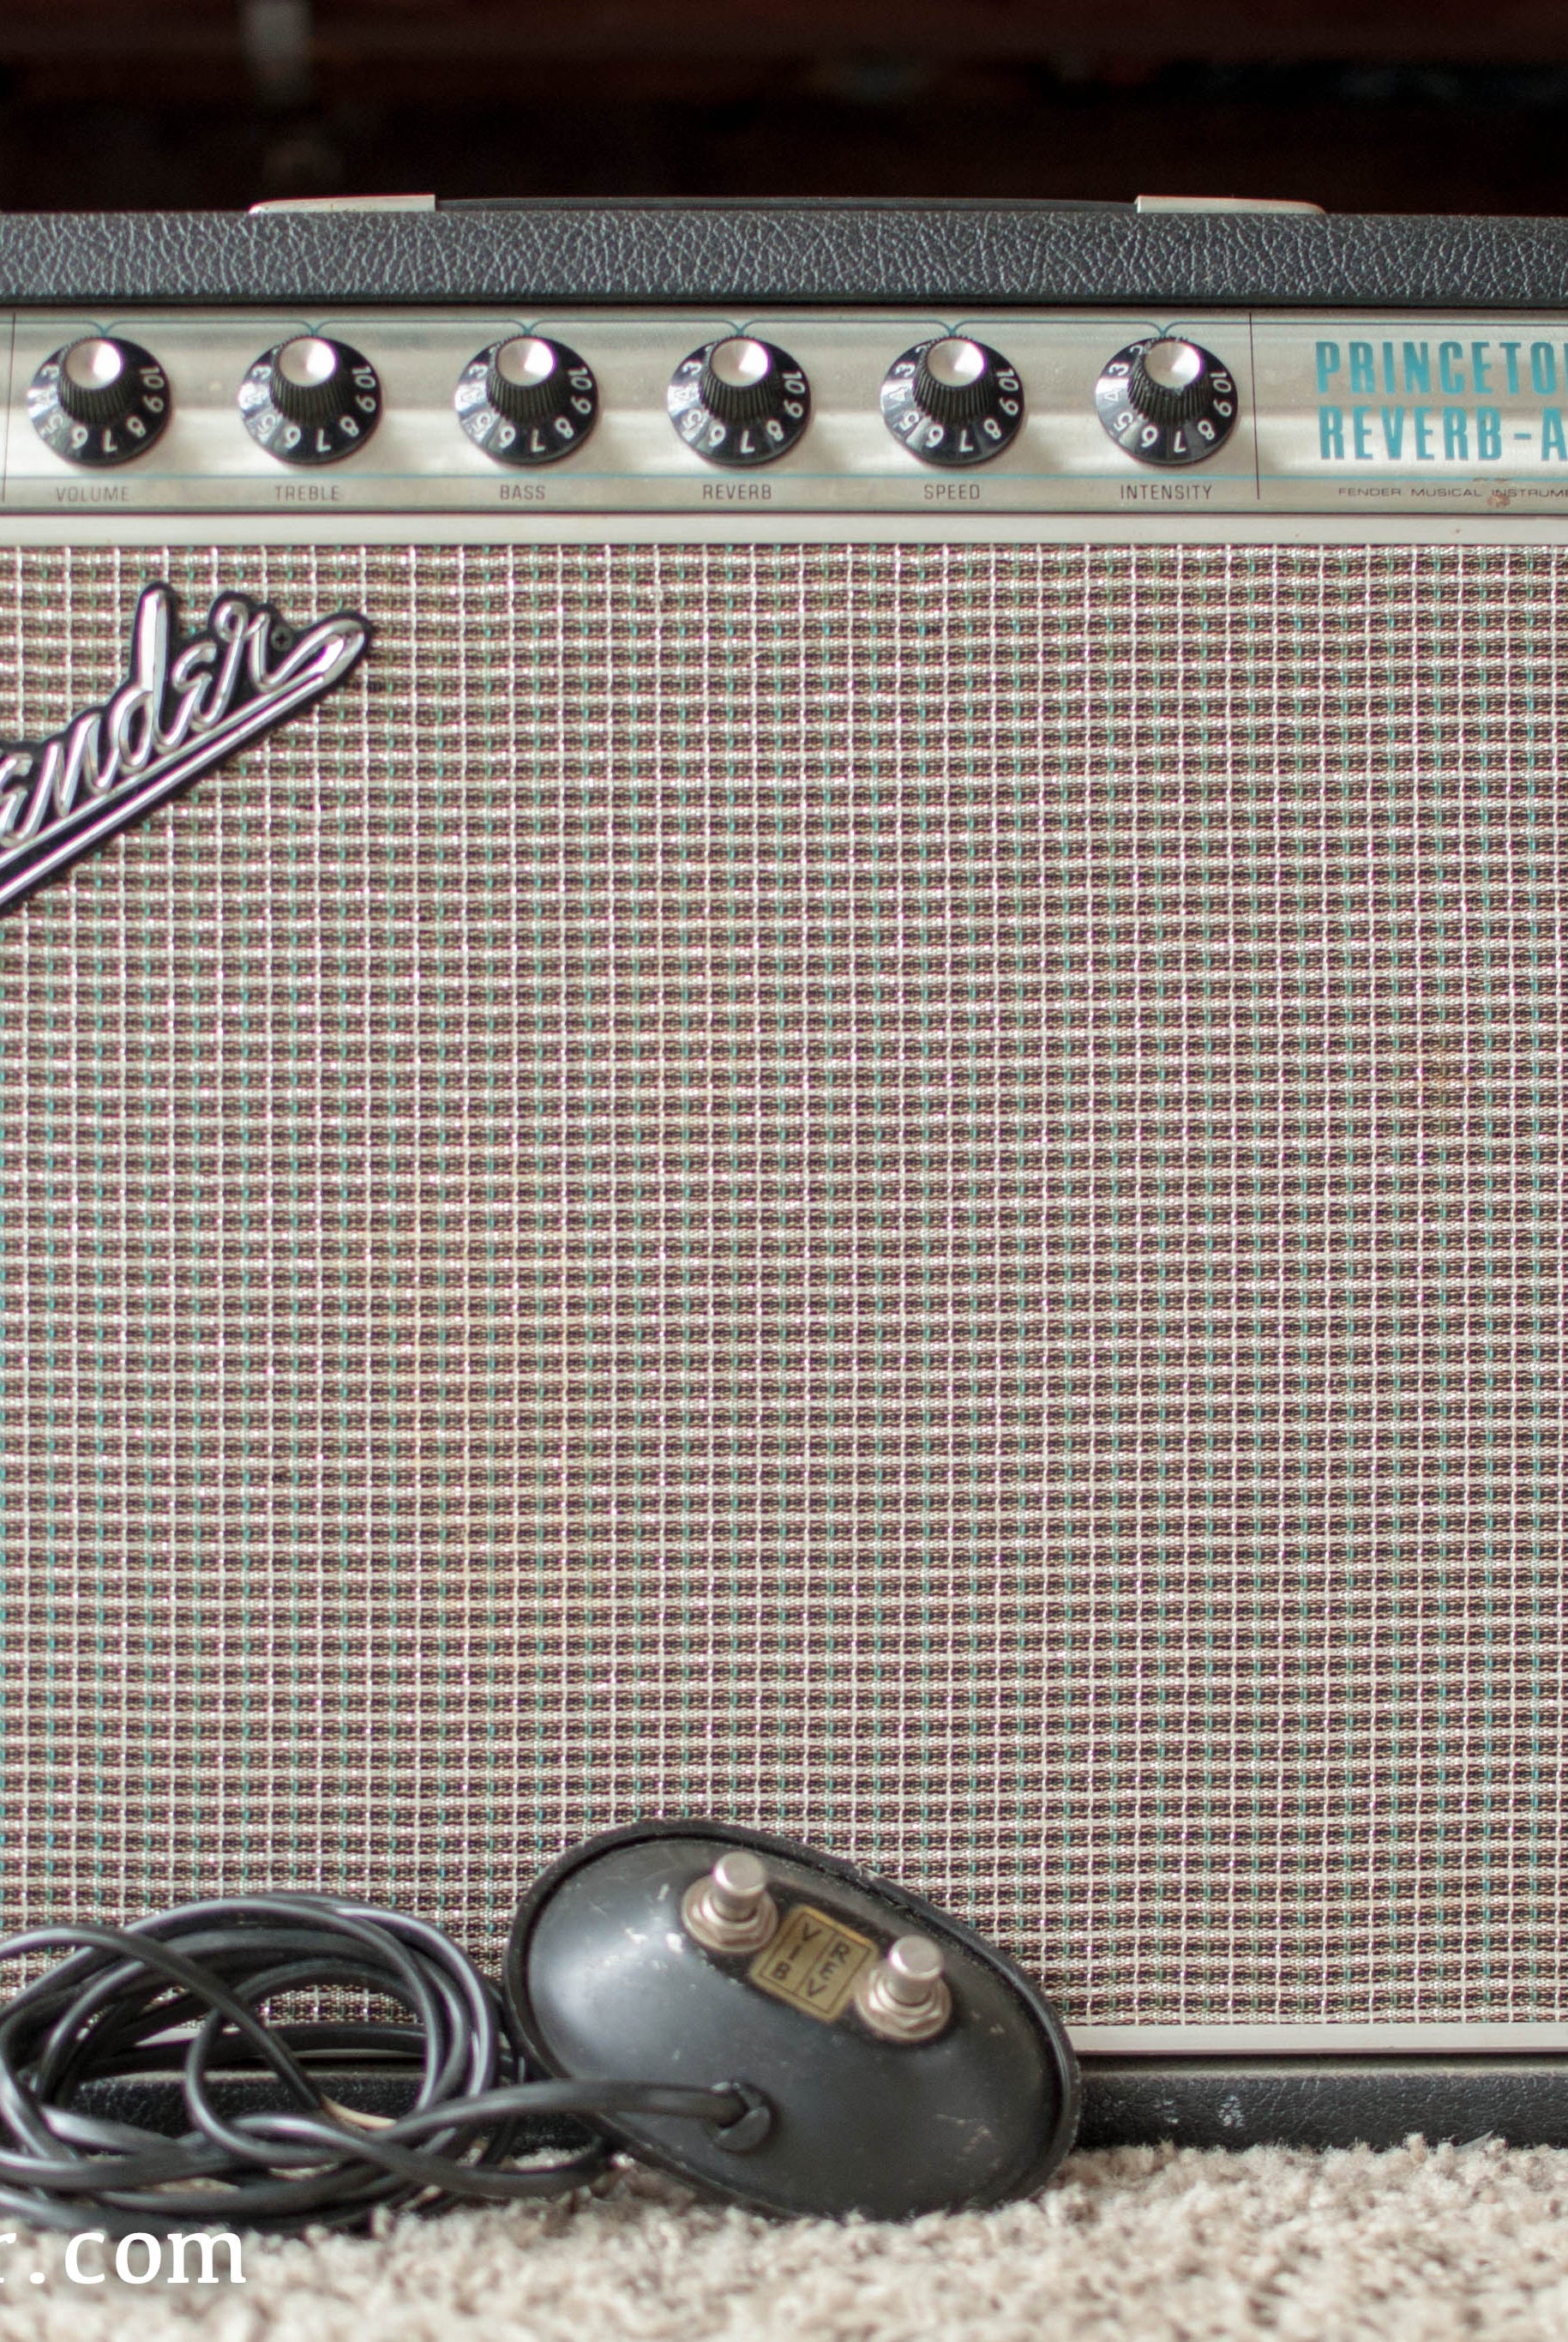 Fender Princeton Reverb guitar amp 1968 vintage drip edge black line